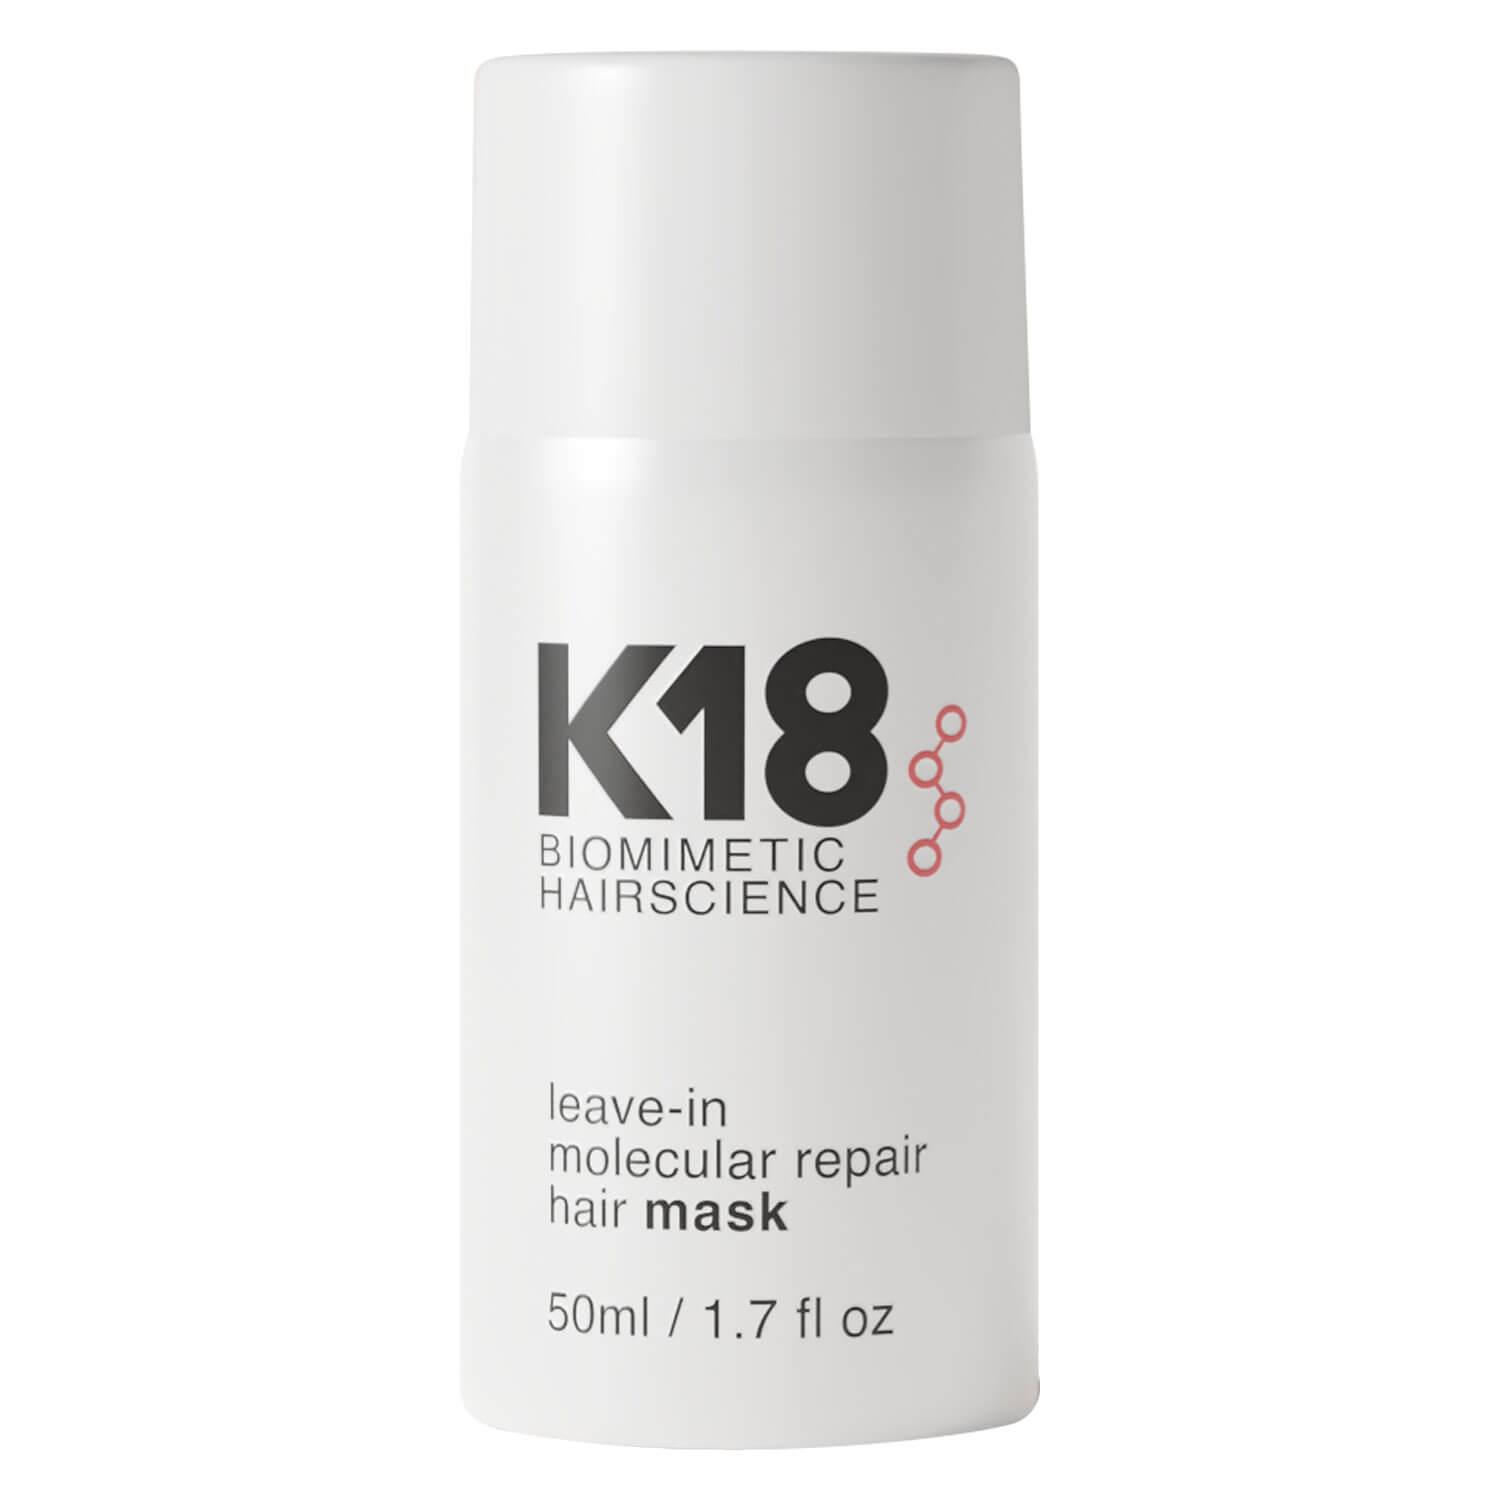 K18 Biomimetic Hairscience - leave-in molecular repair hair mask